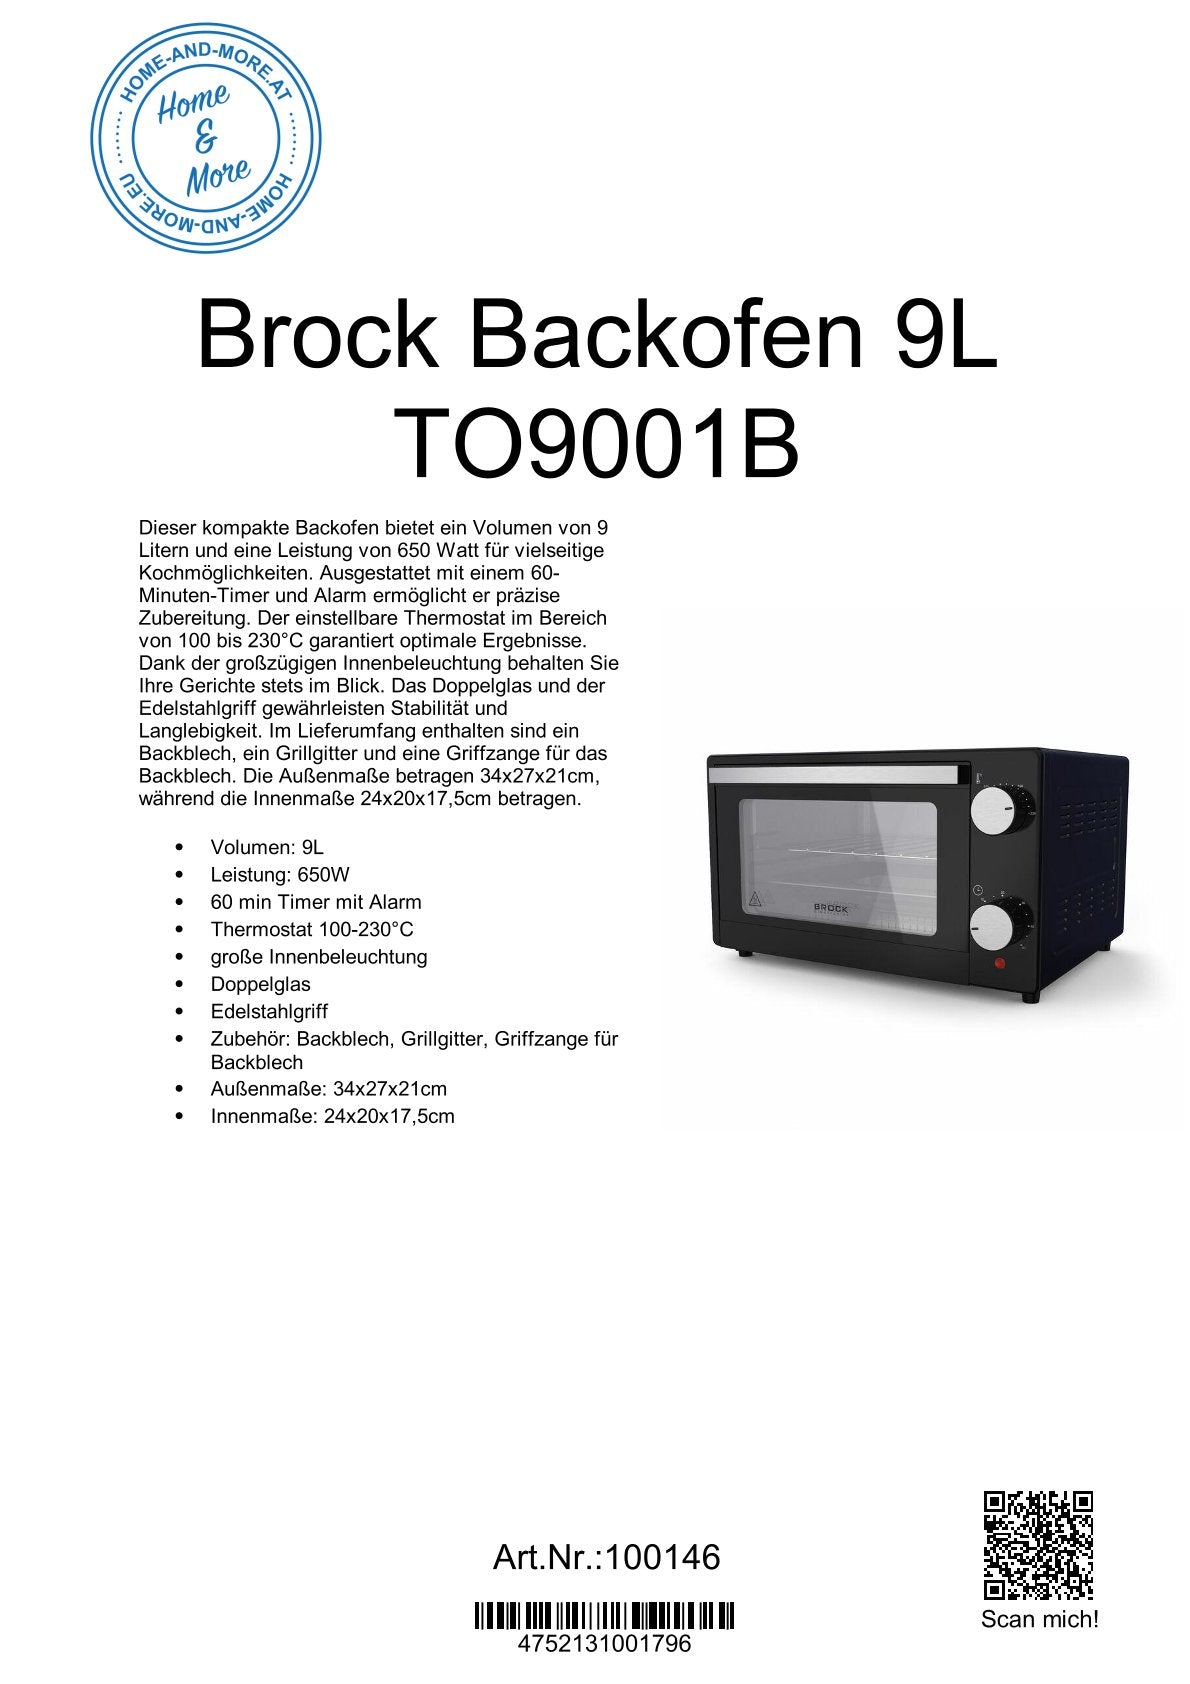 Brock Backofen 9L TO9001B